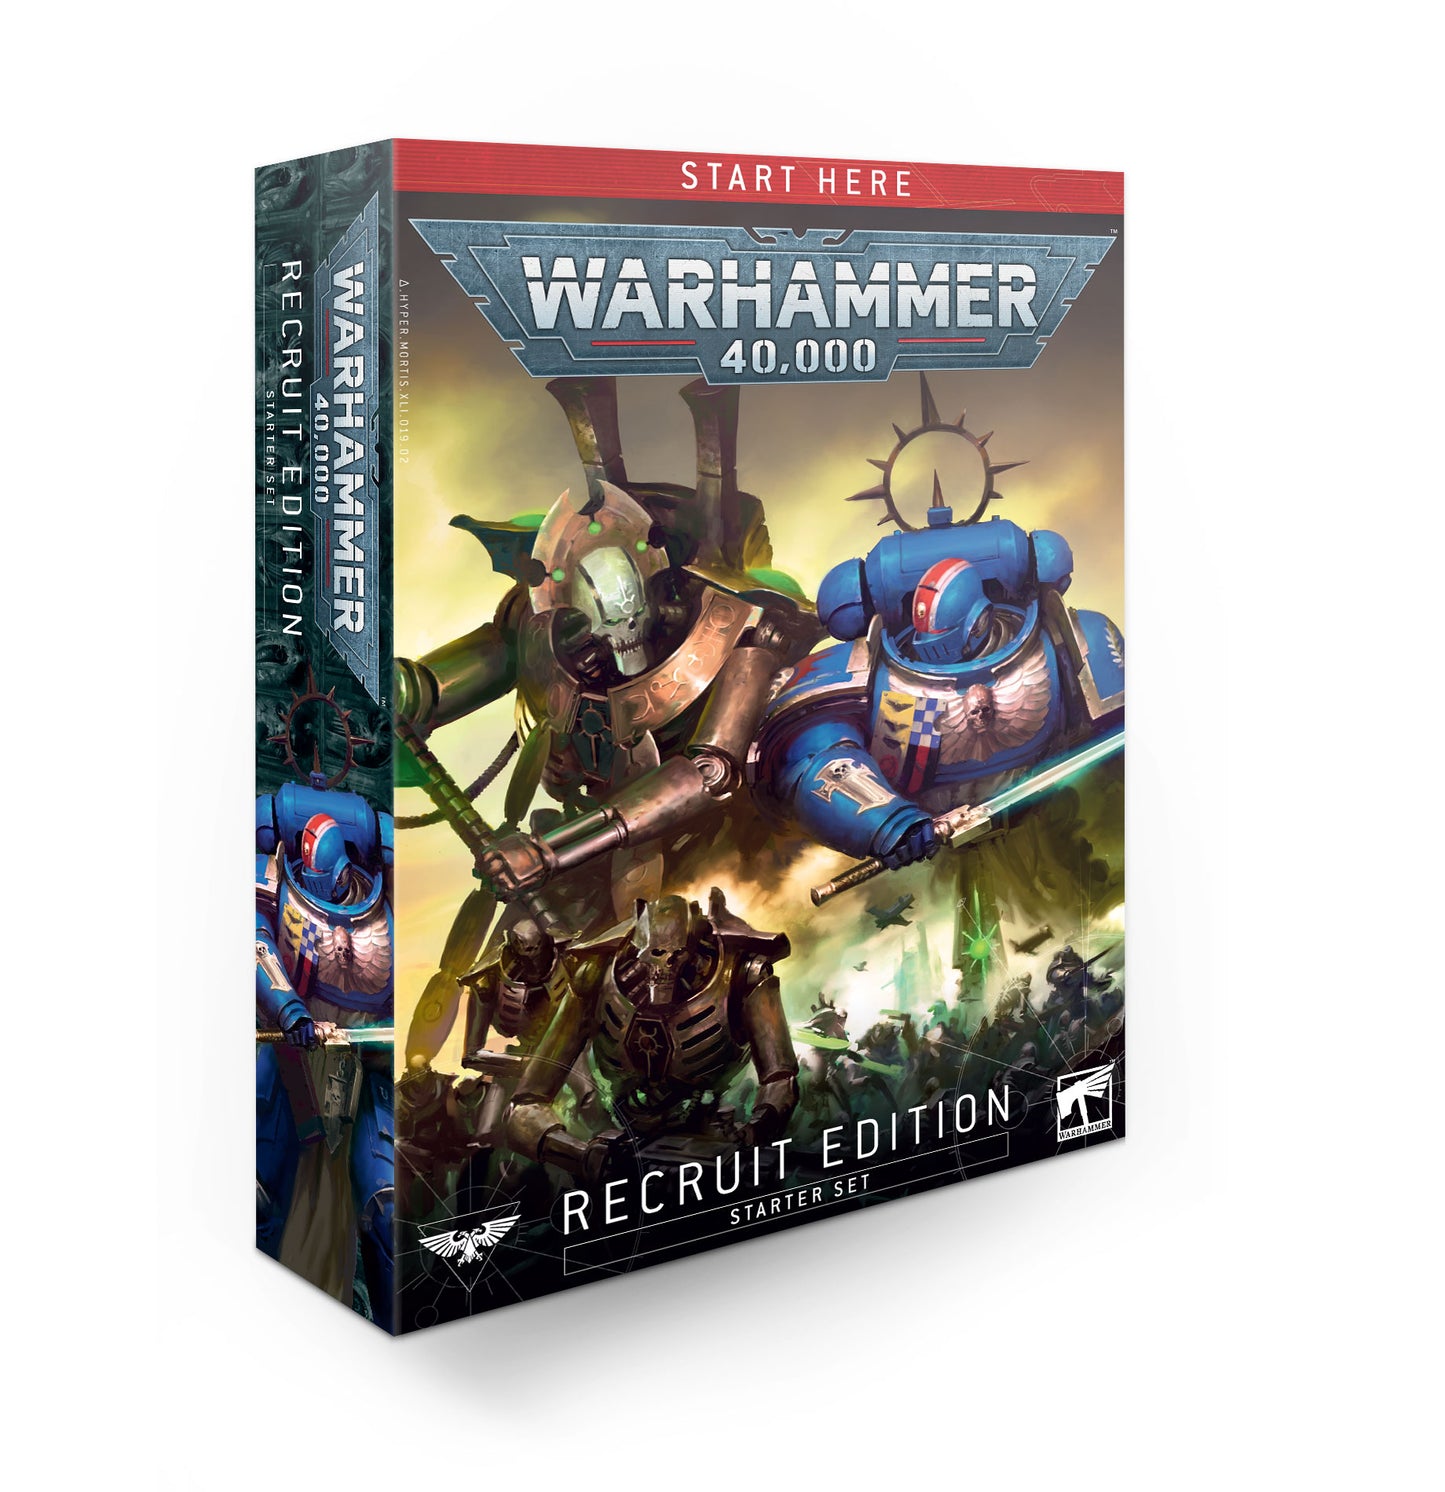 Warhammer 40,000 Recruit Edition box art